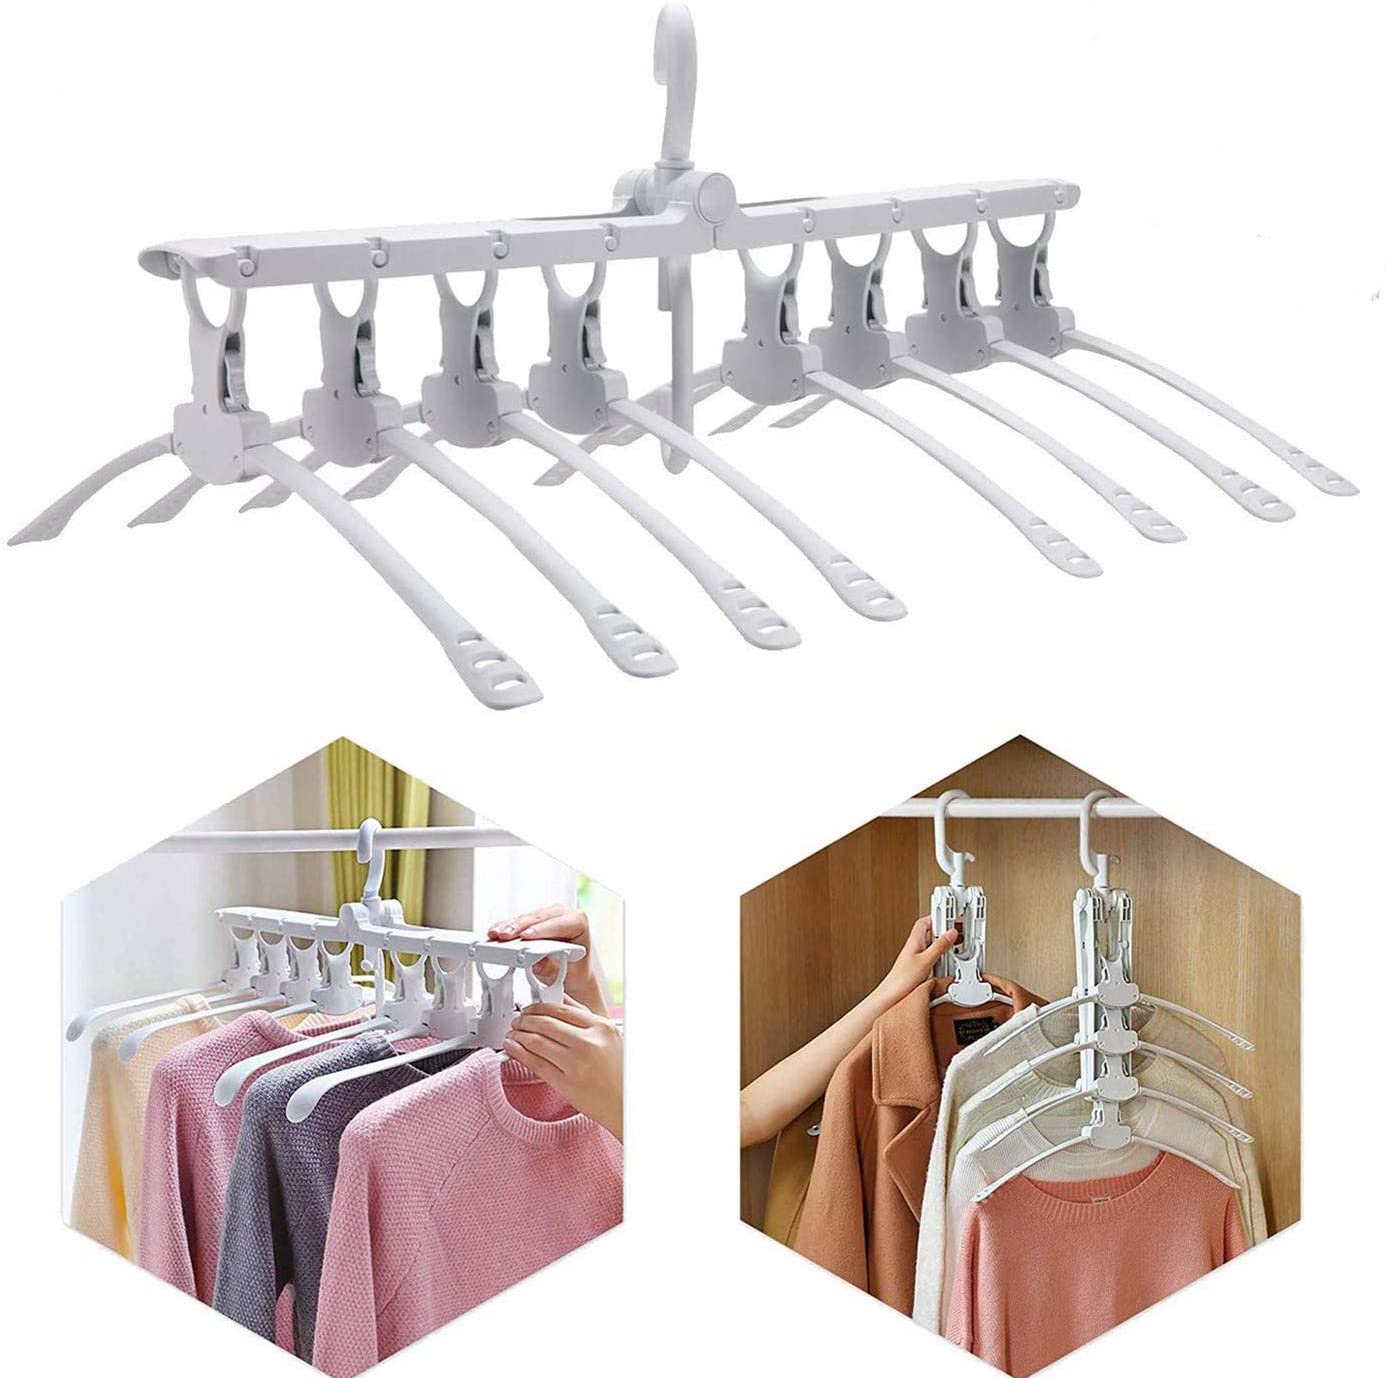 Folding Travel Hangers